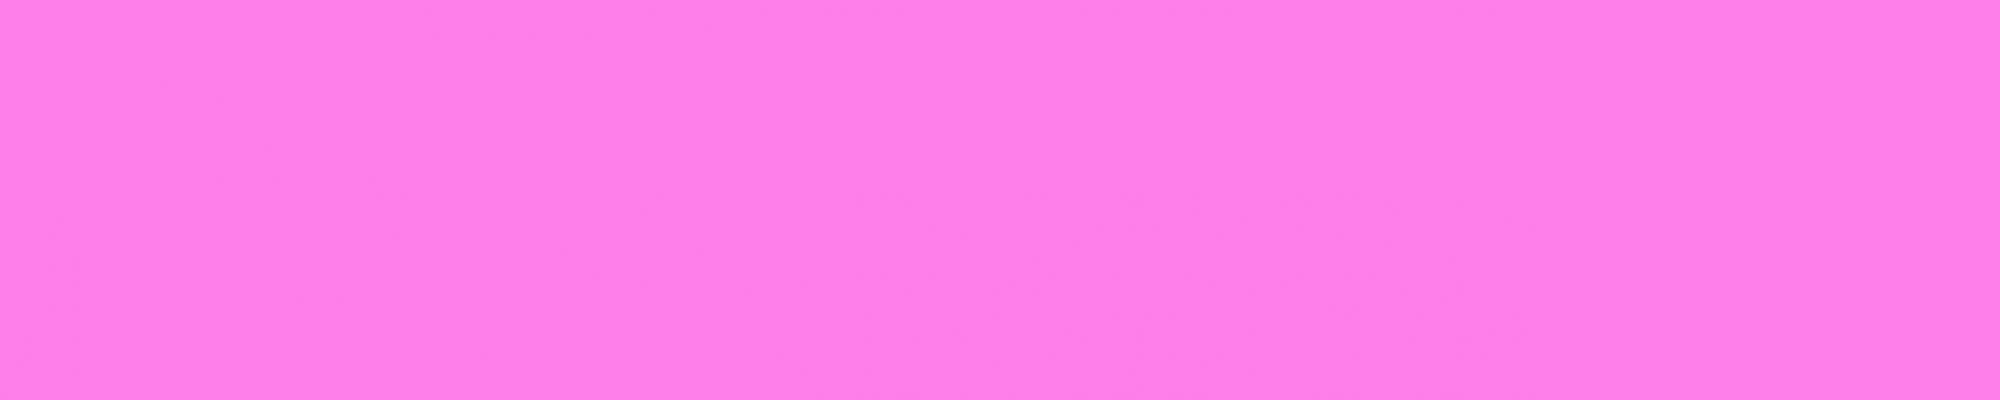 Burdett Pink